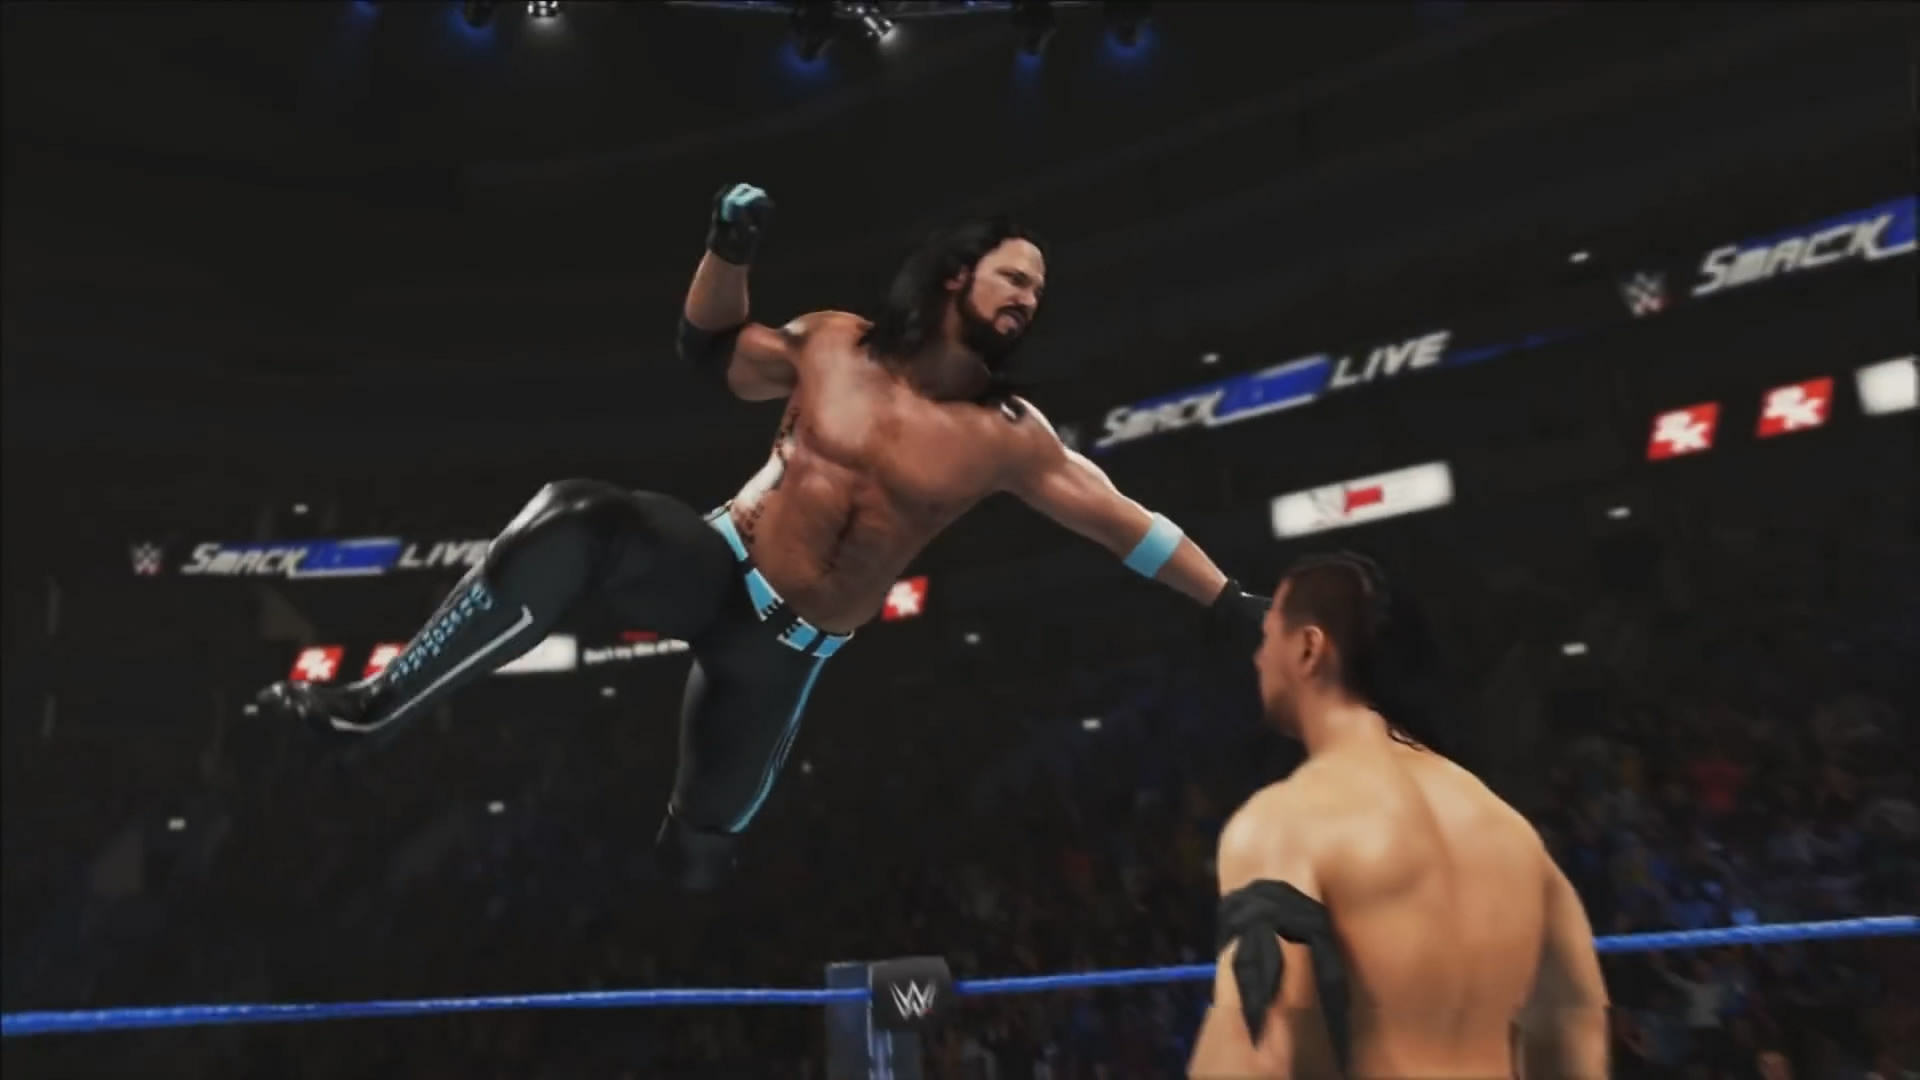 《WWE 2K19》新预告片 超级巨星激情摔跤爽个不停